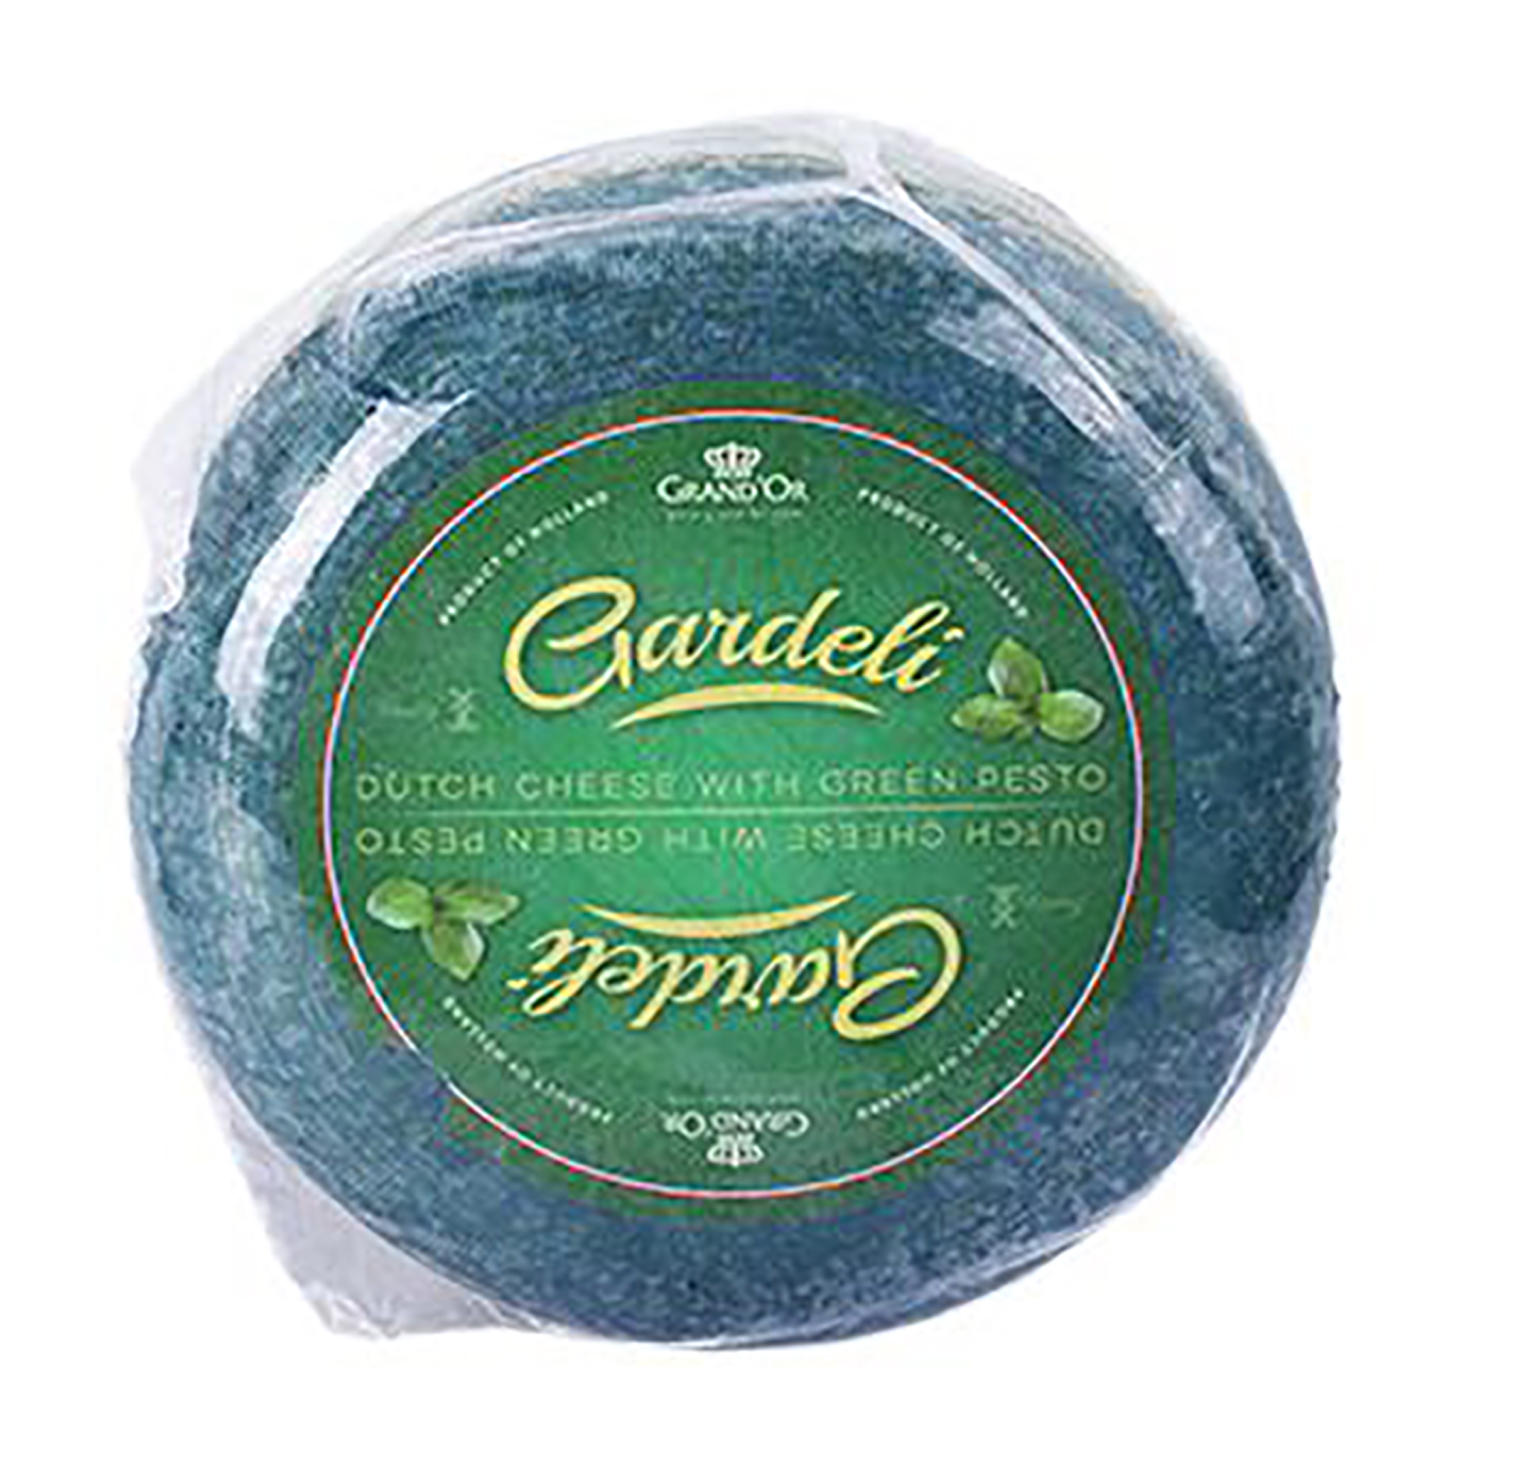 Gardeli Gouda cheese with green pesto 50% 2